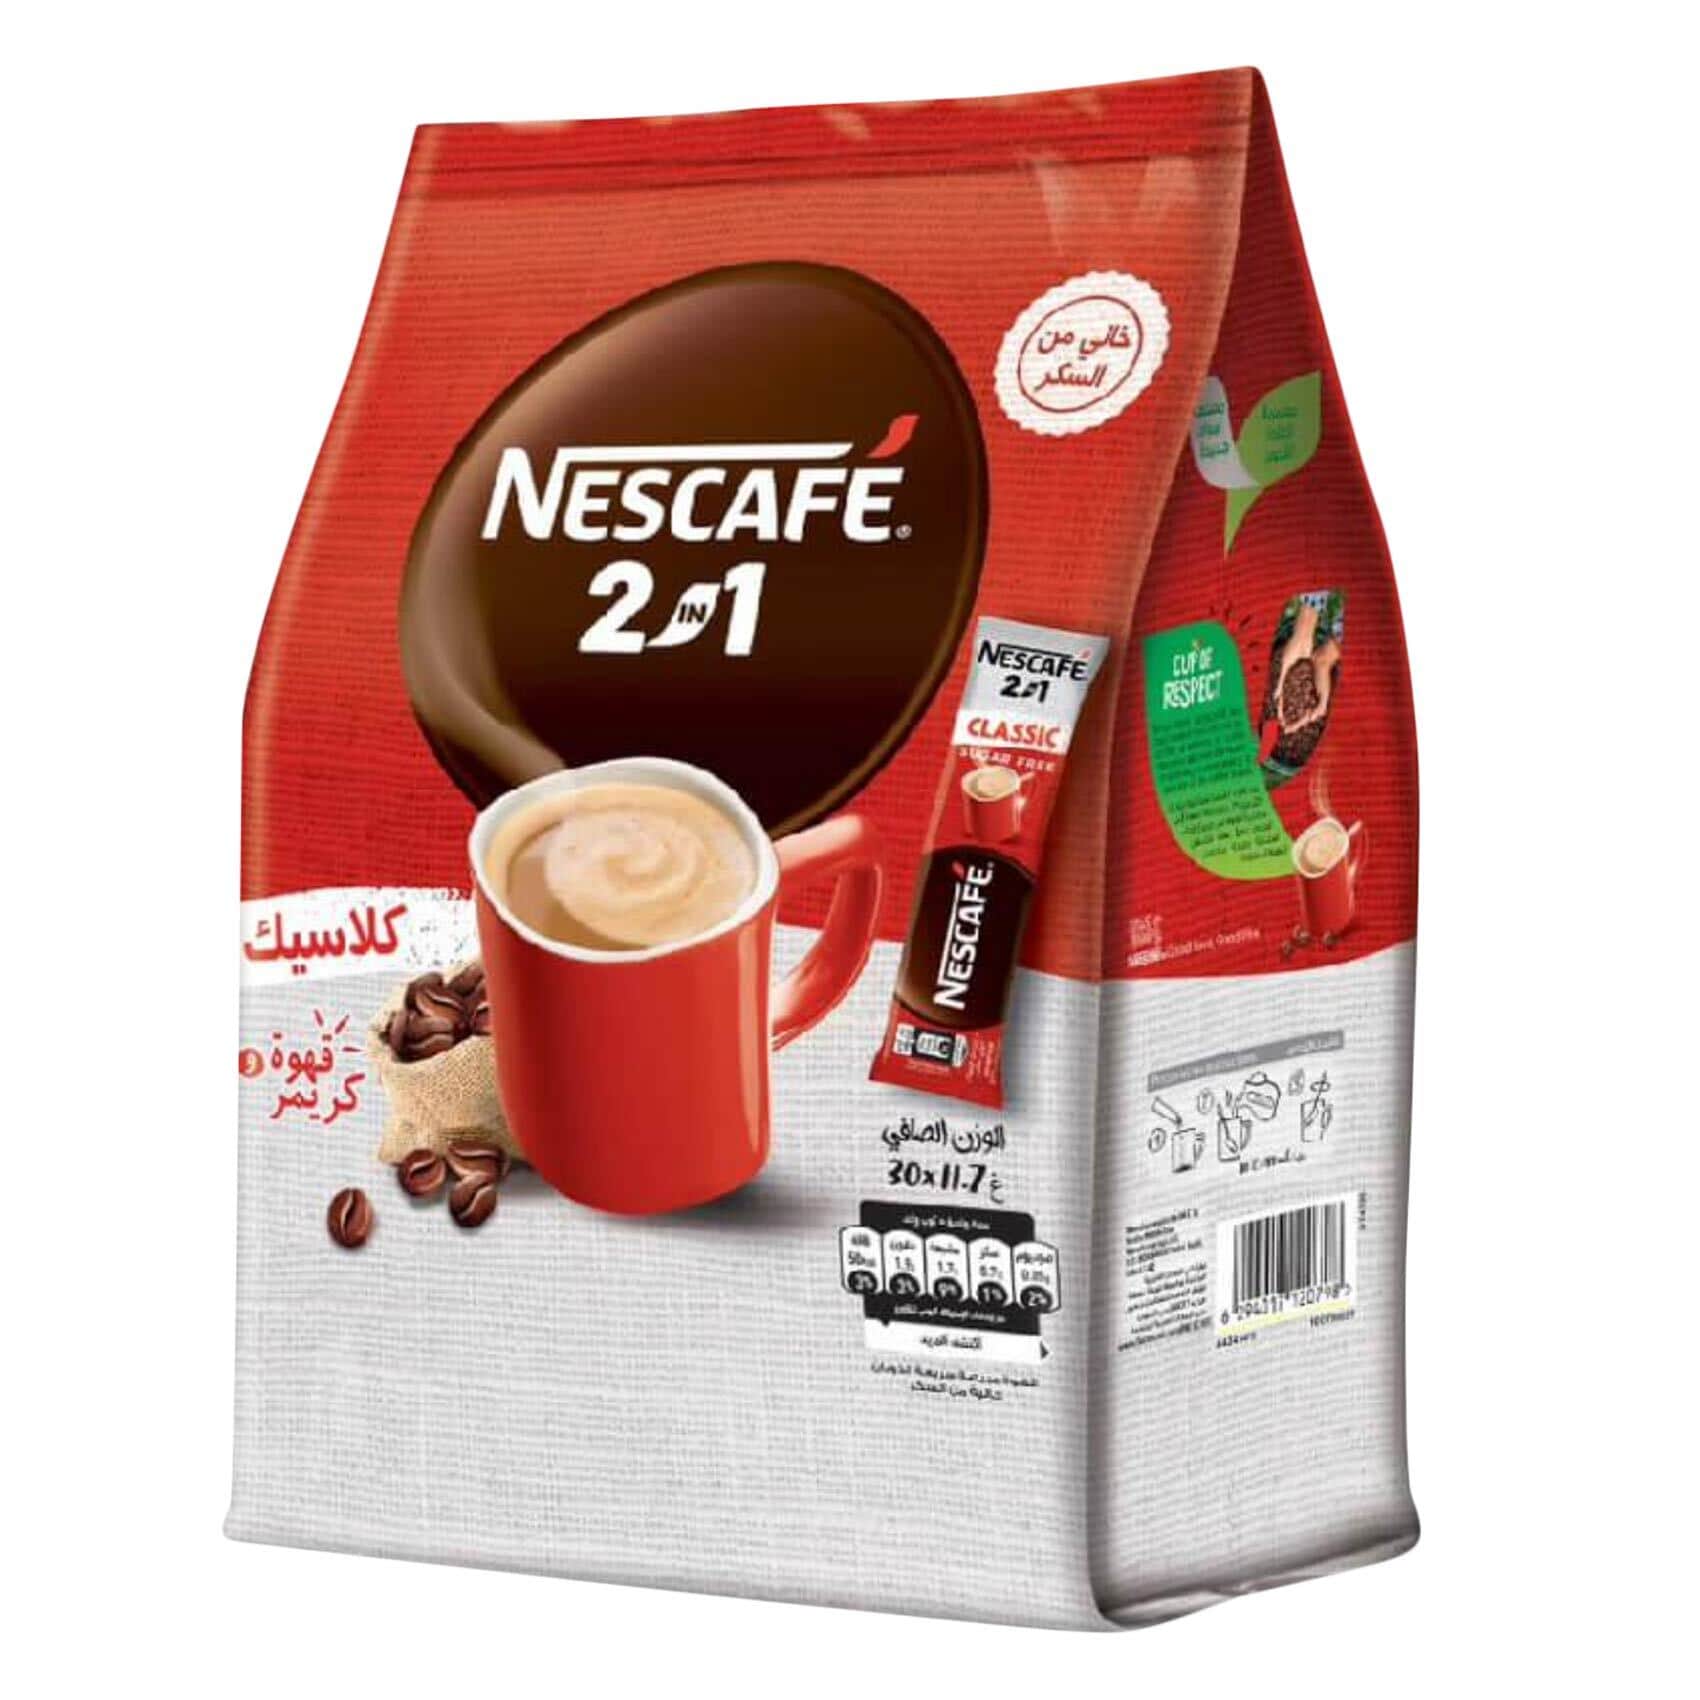 Buy Nescafe Ice Salted Caramel 25g Online - Shop Beverages on Carrefour UAE